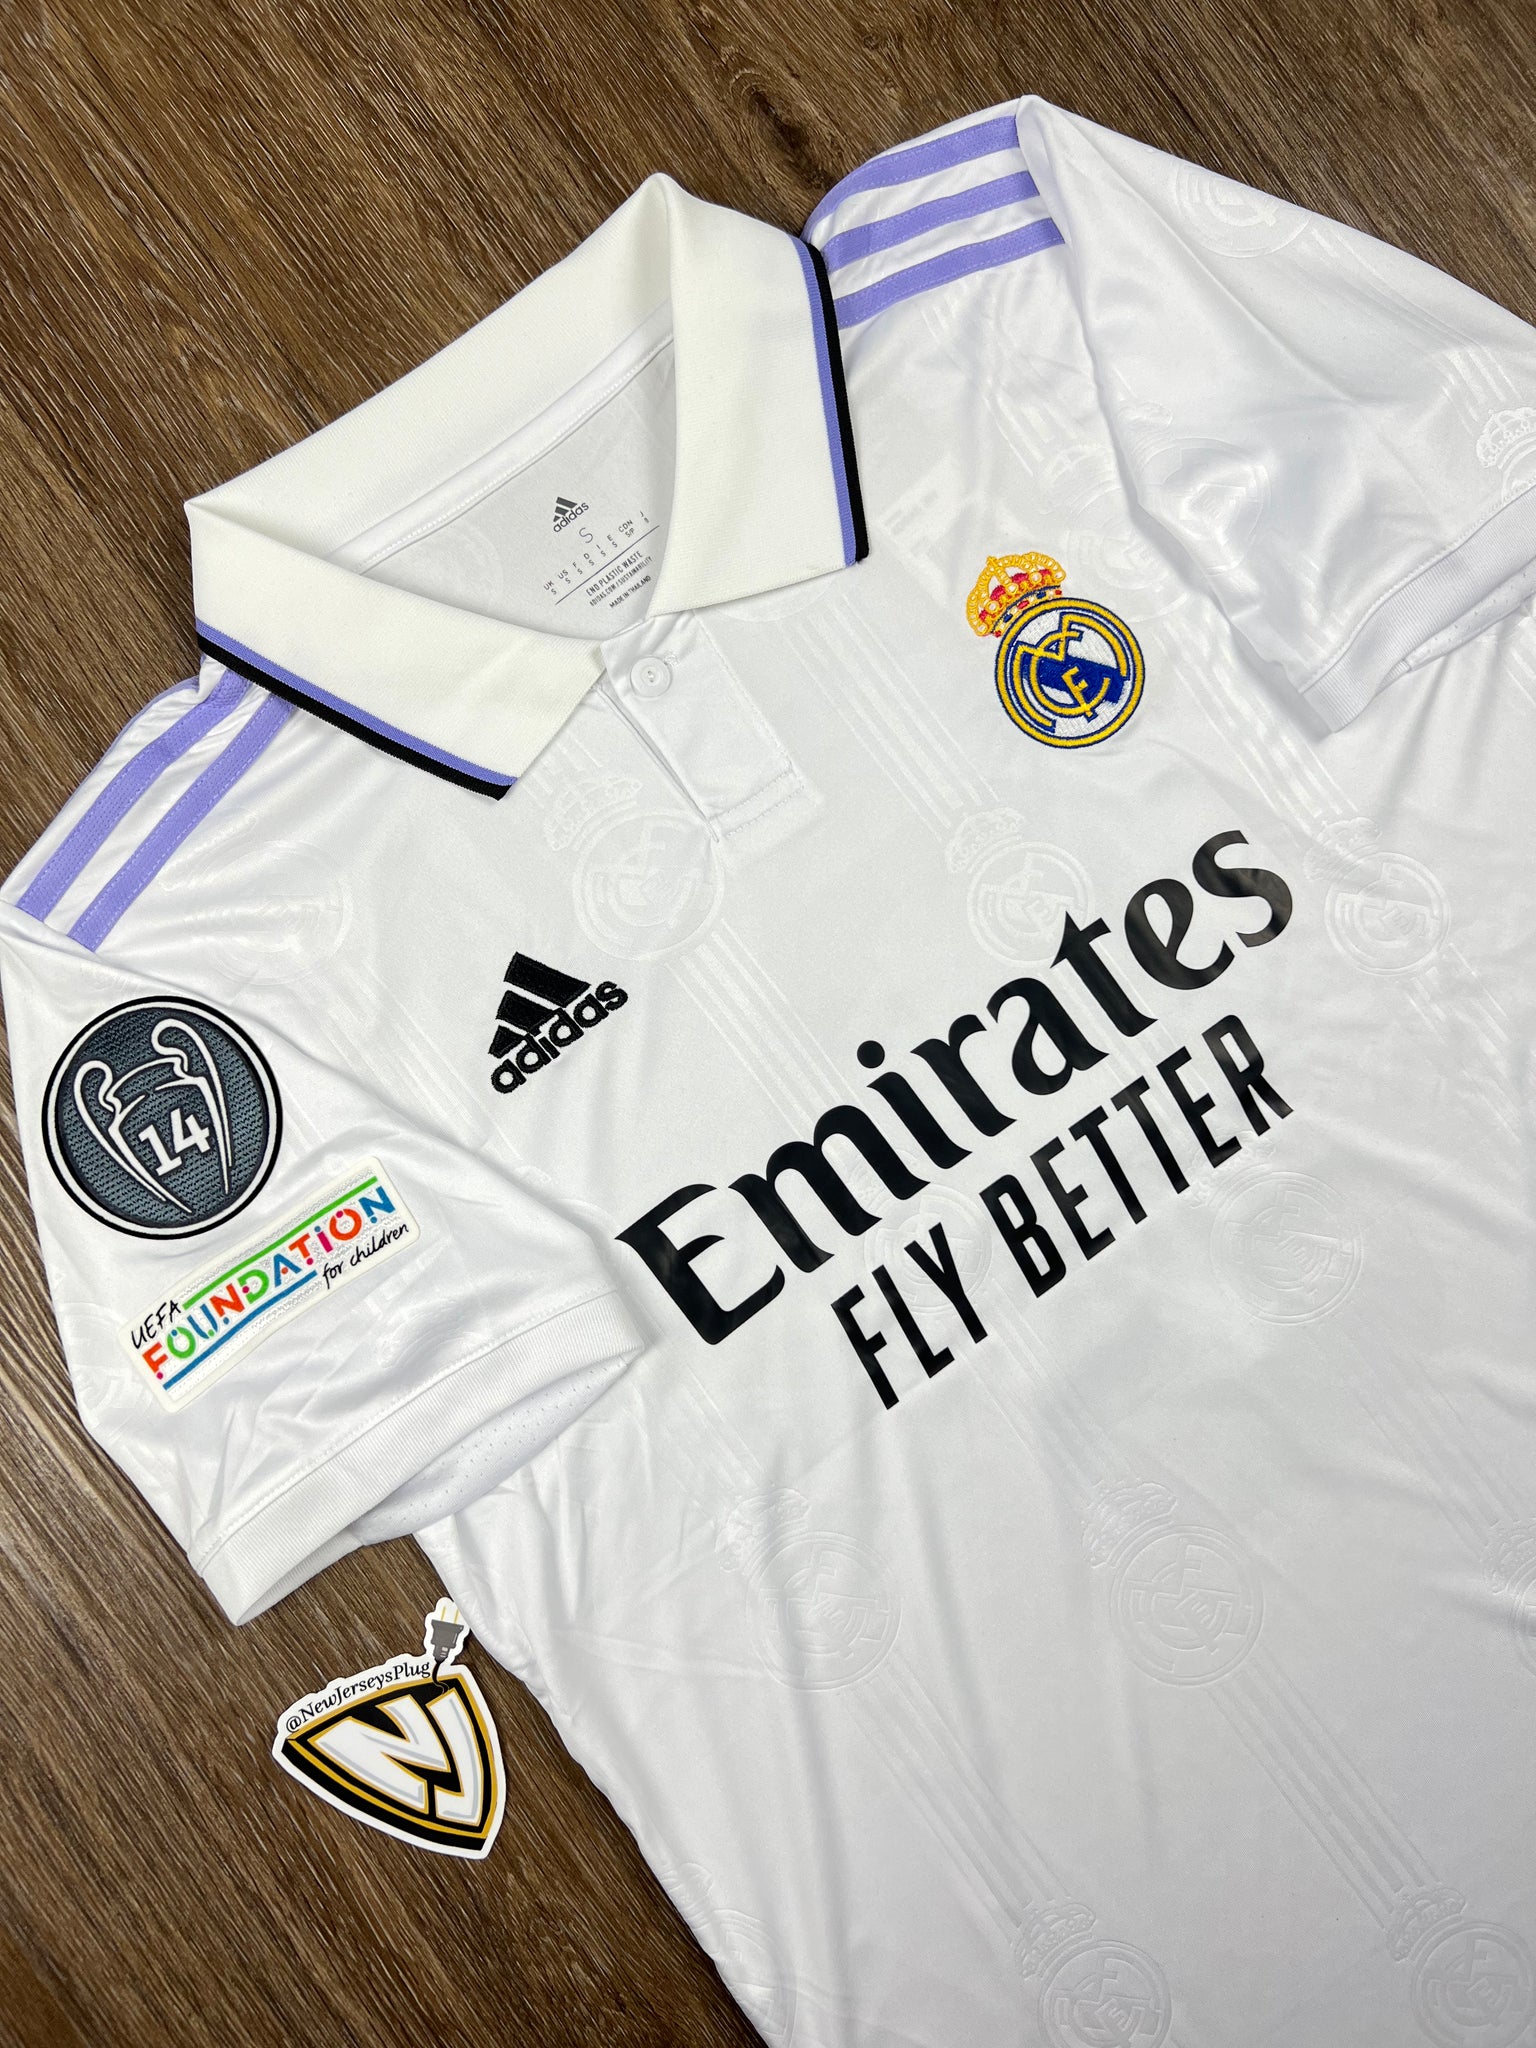 Real Madrid Karim Benzema 9 Home Jersey